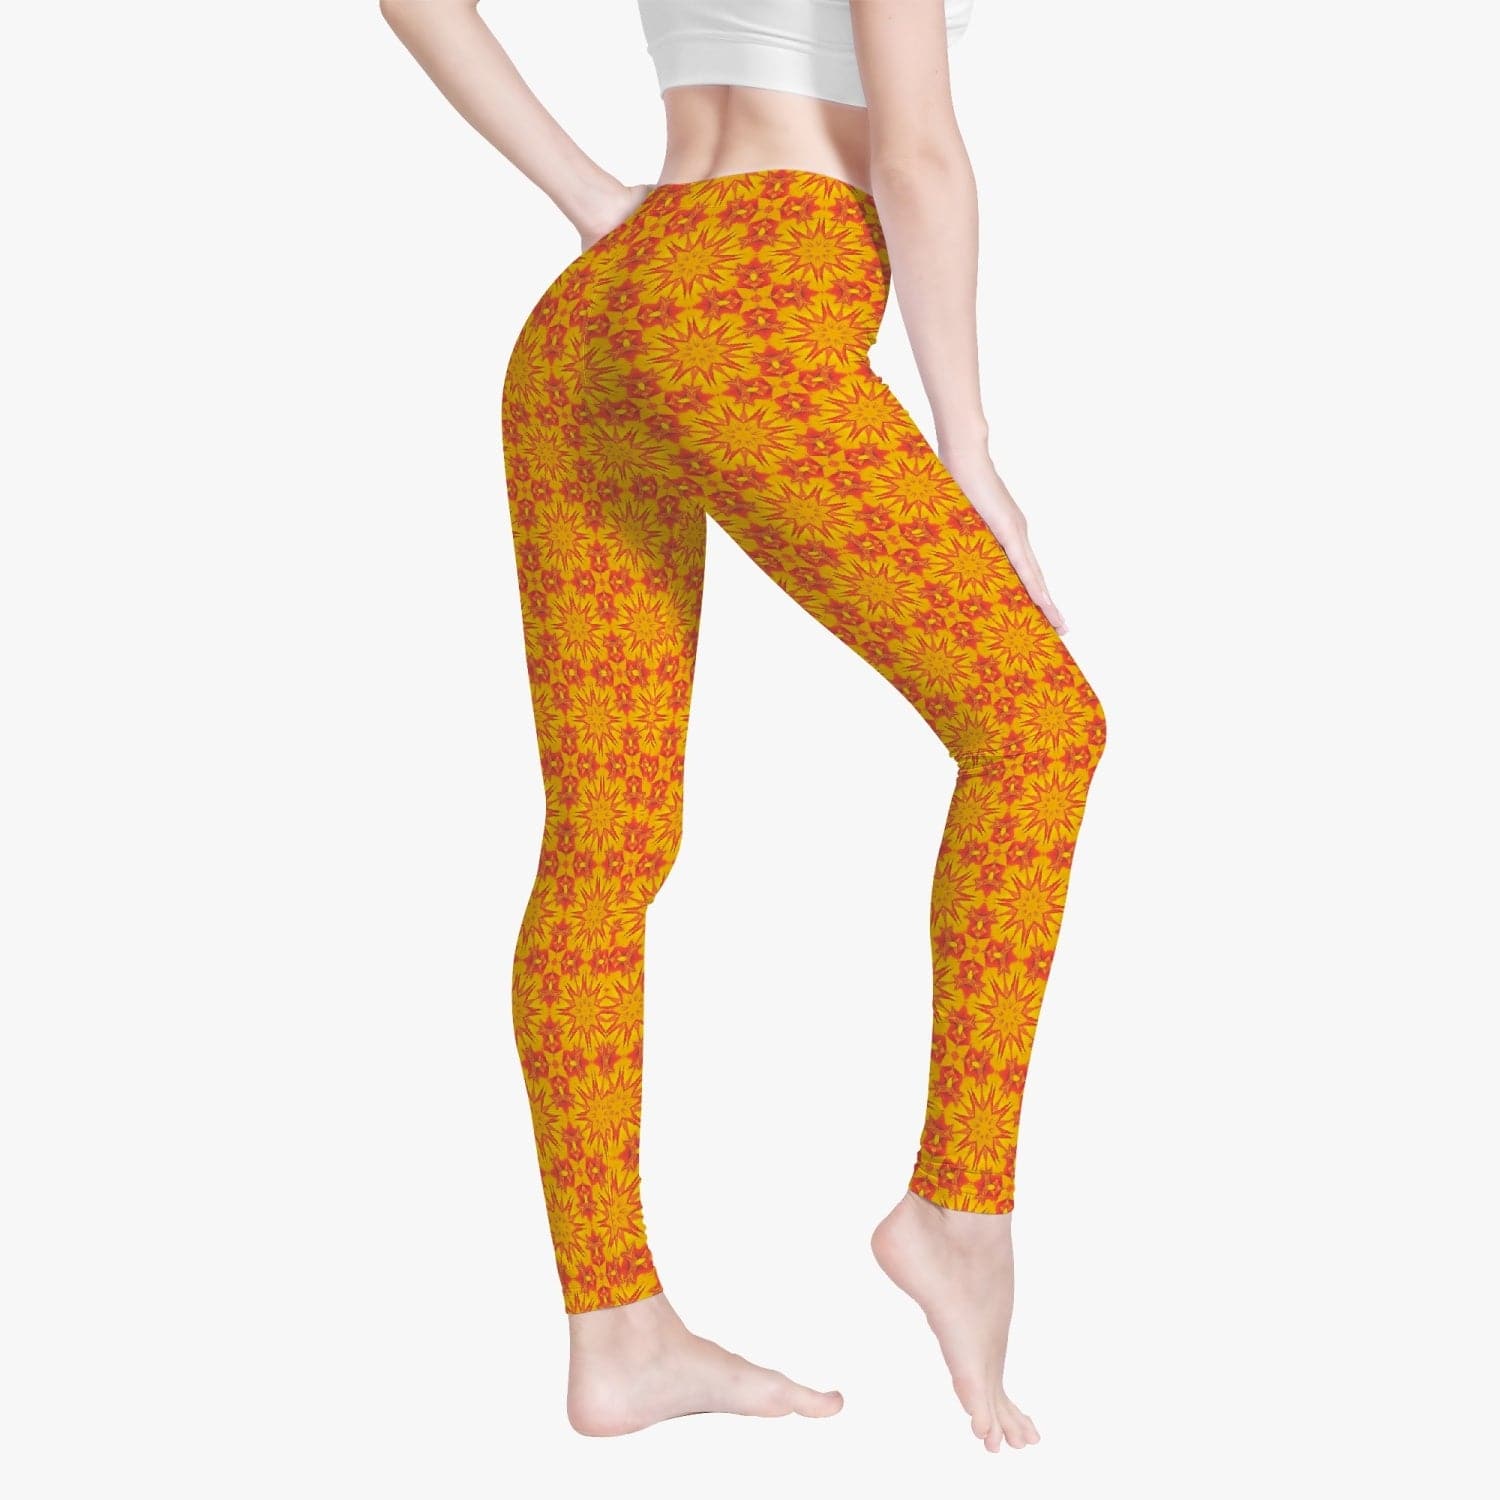 Solar Plexus Yoga Pants, by Sensus Studio Design